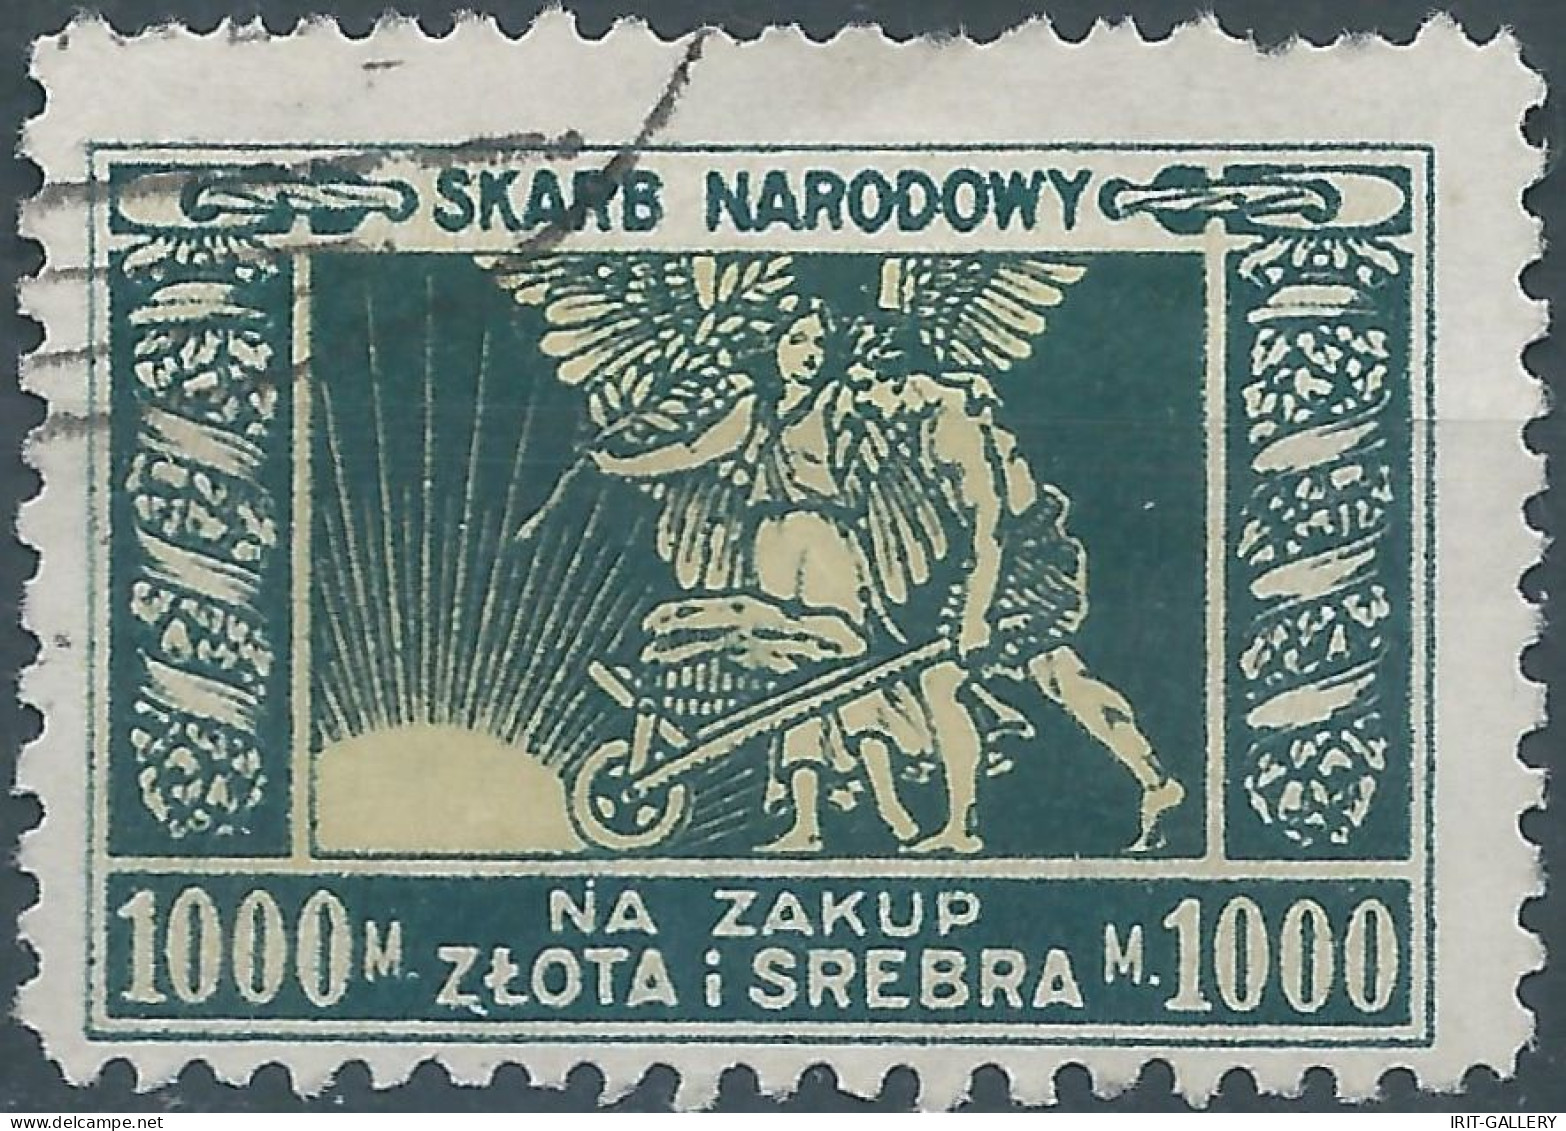 POLONIA-POLAND-POLSKA,1920 Revenue Stamp SKARB NARODOWY NA ZAKUP ZLOTA I SREBRA-NATIONAL TREASURE,1000M,Obliterated - Fiscaux